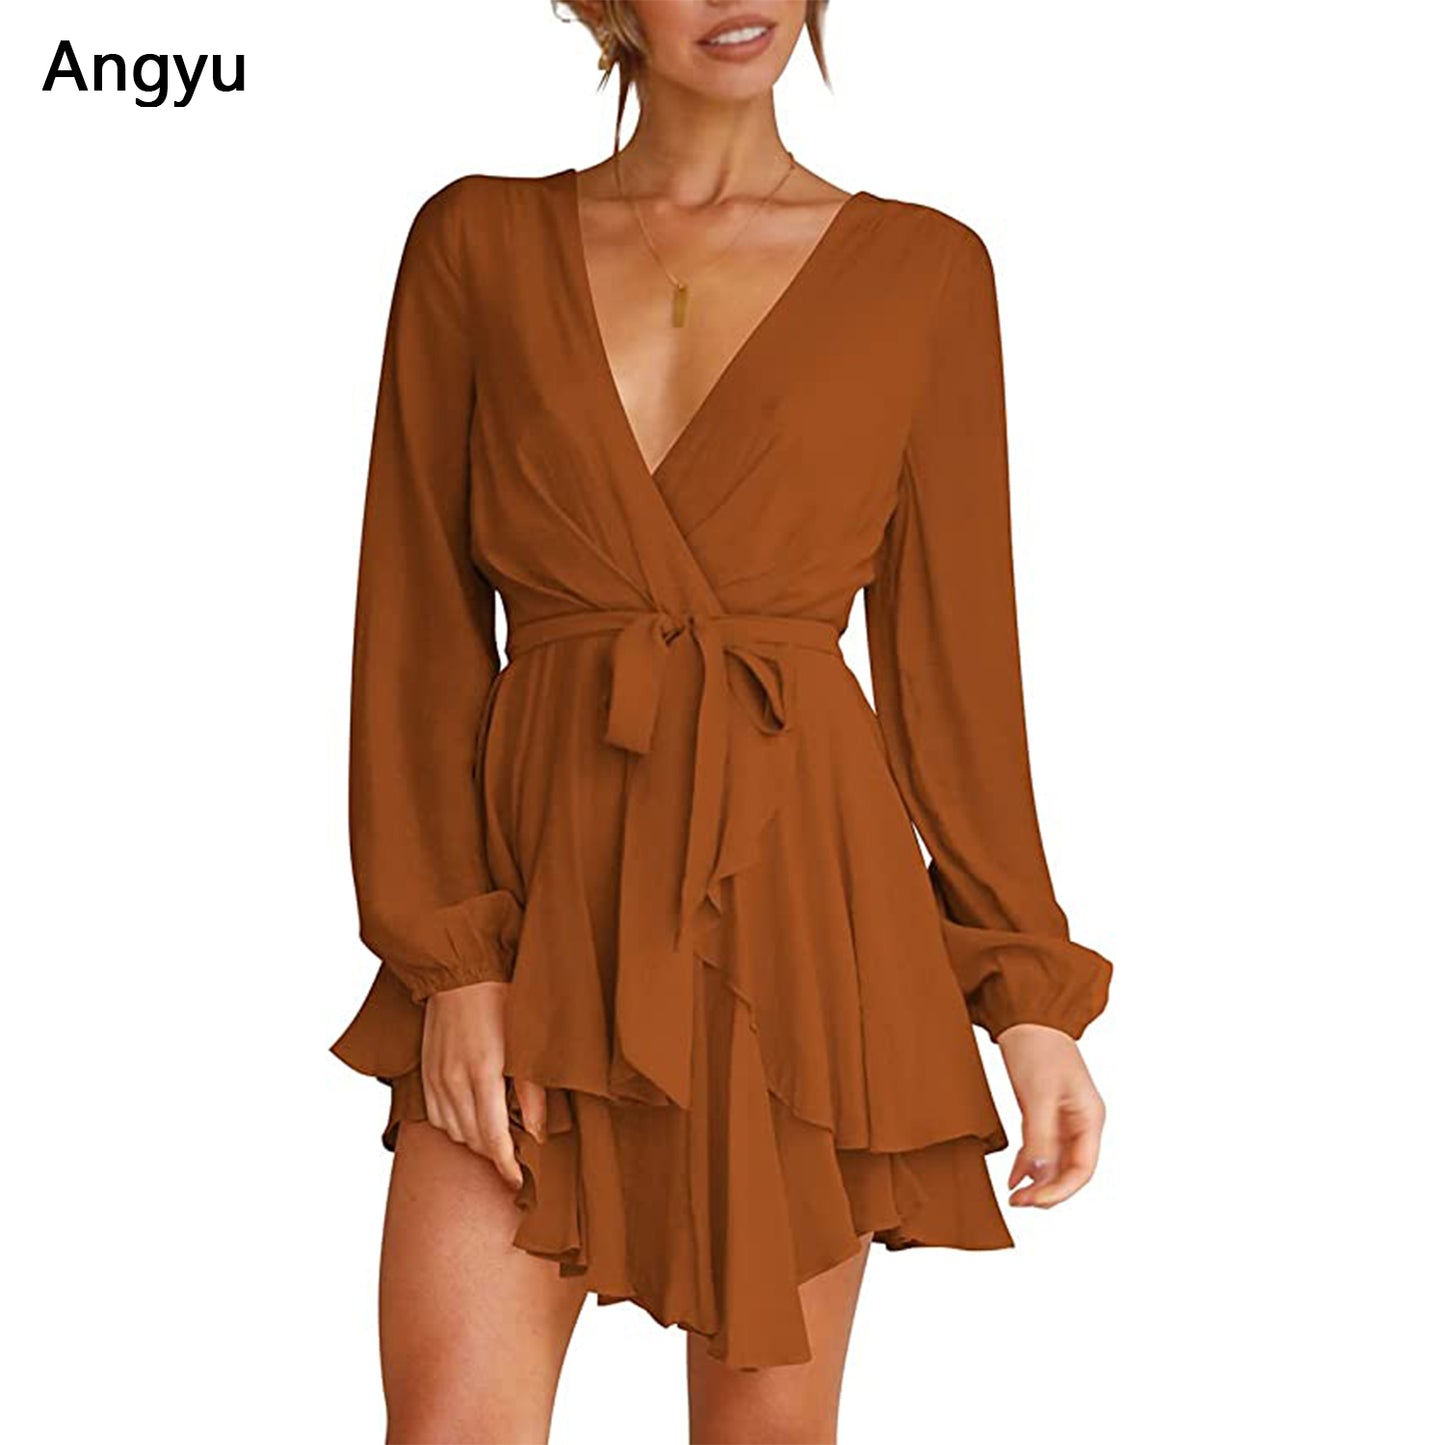 Angyu Women's Dress Deep V-Neck Long Sleeve